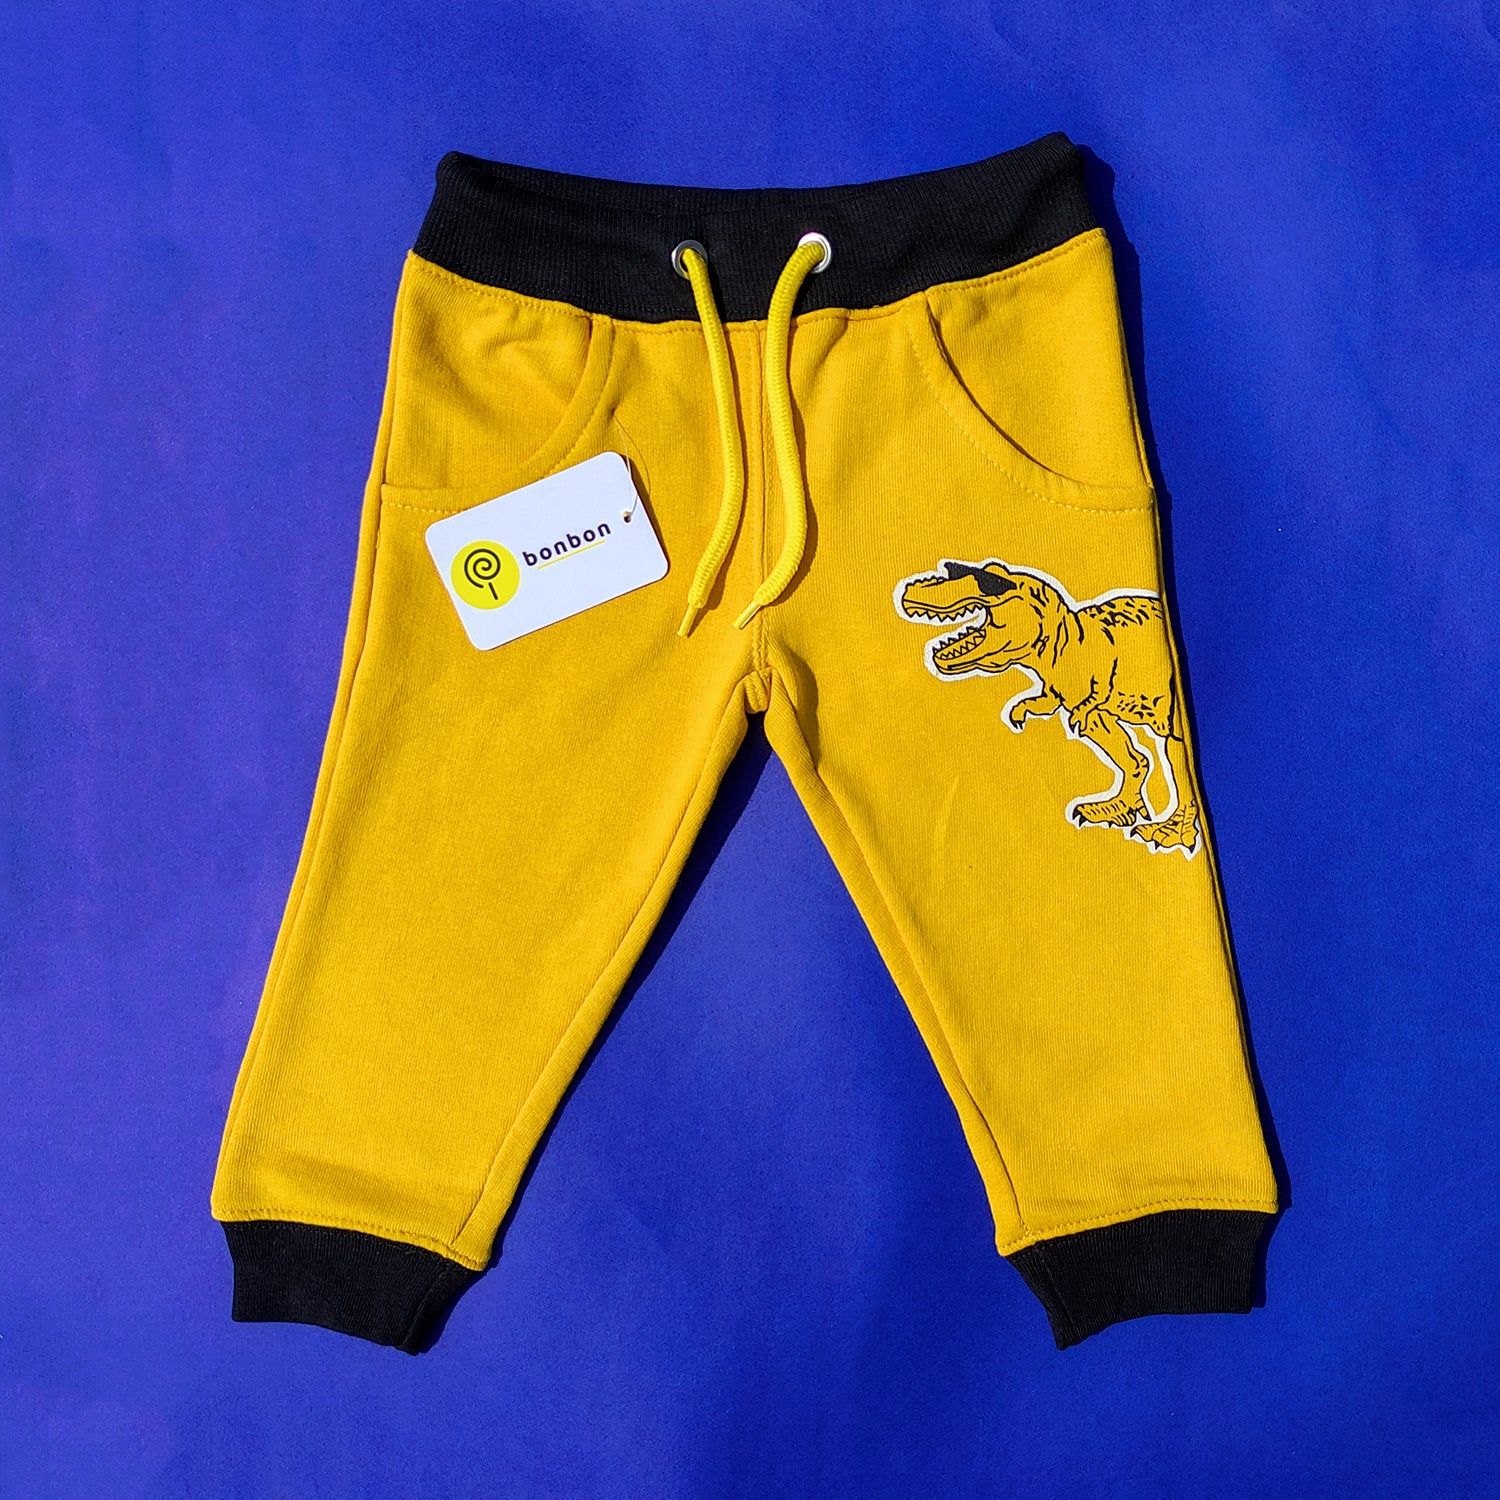 Party Rex Dandelion Yellow Trousers